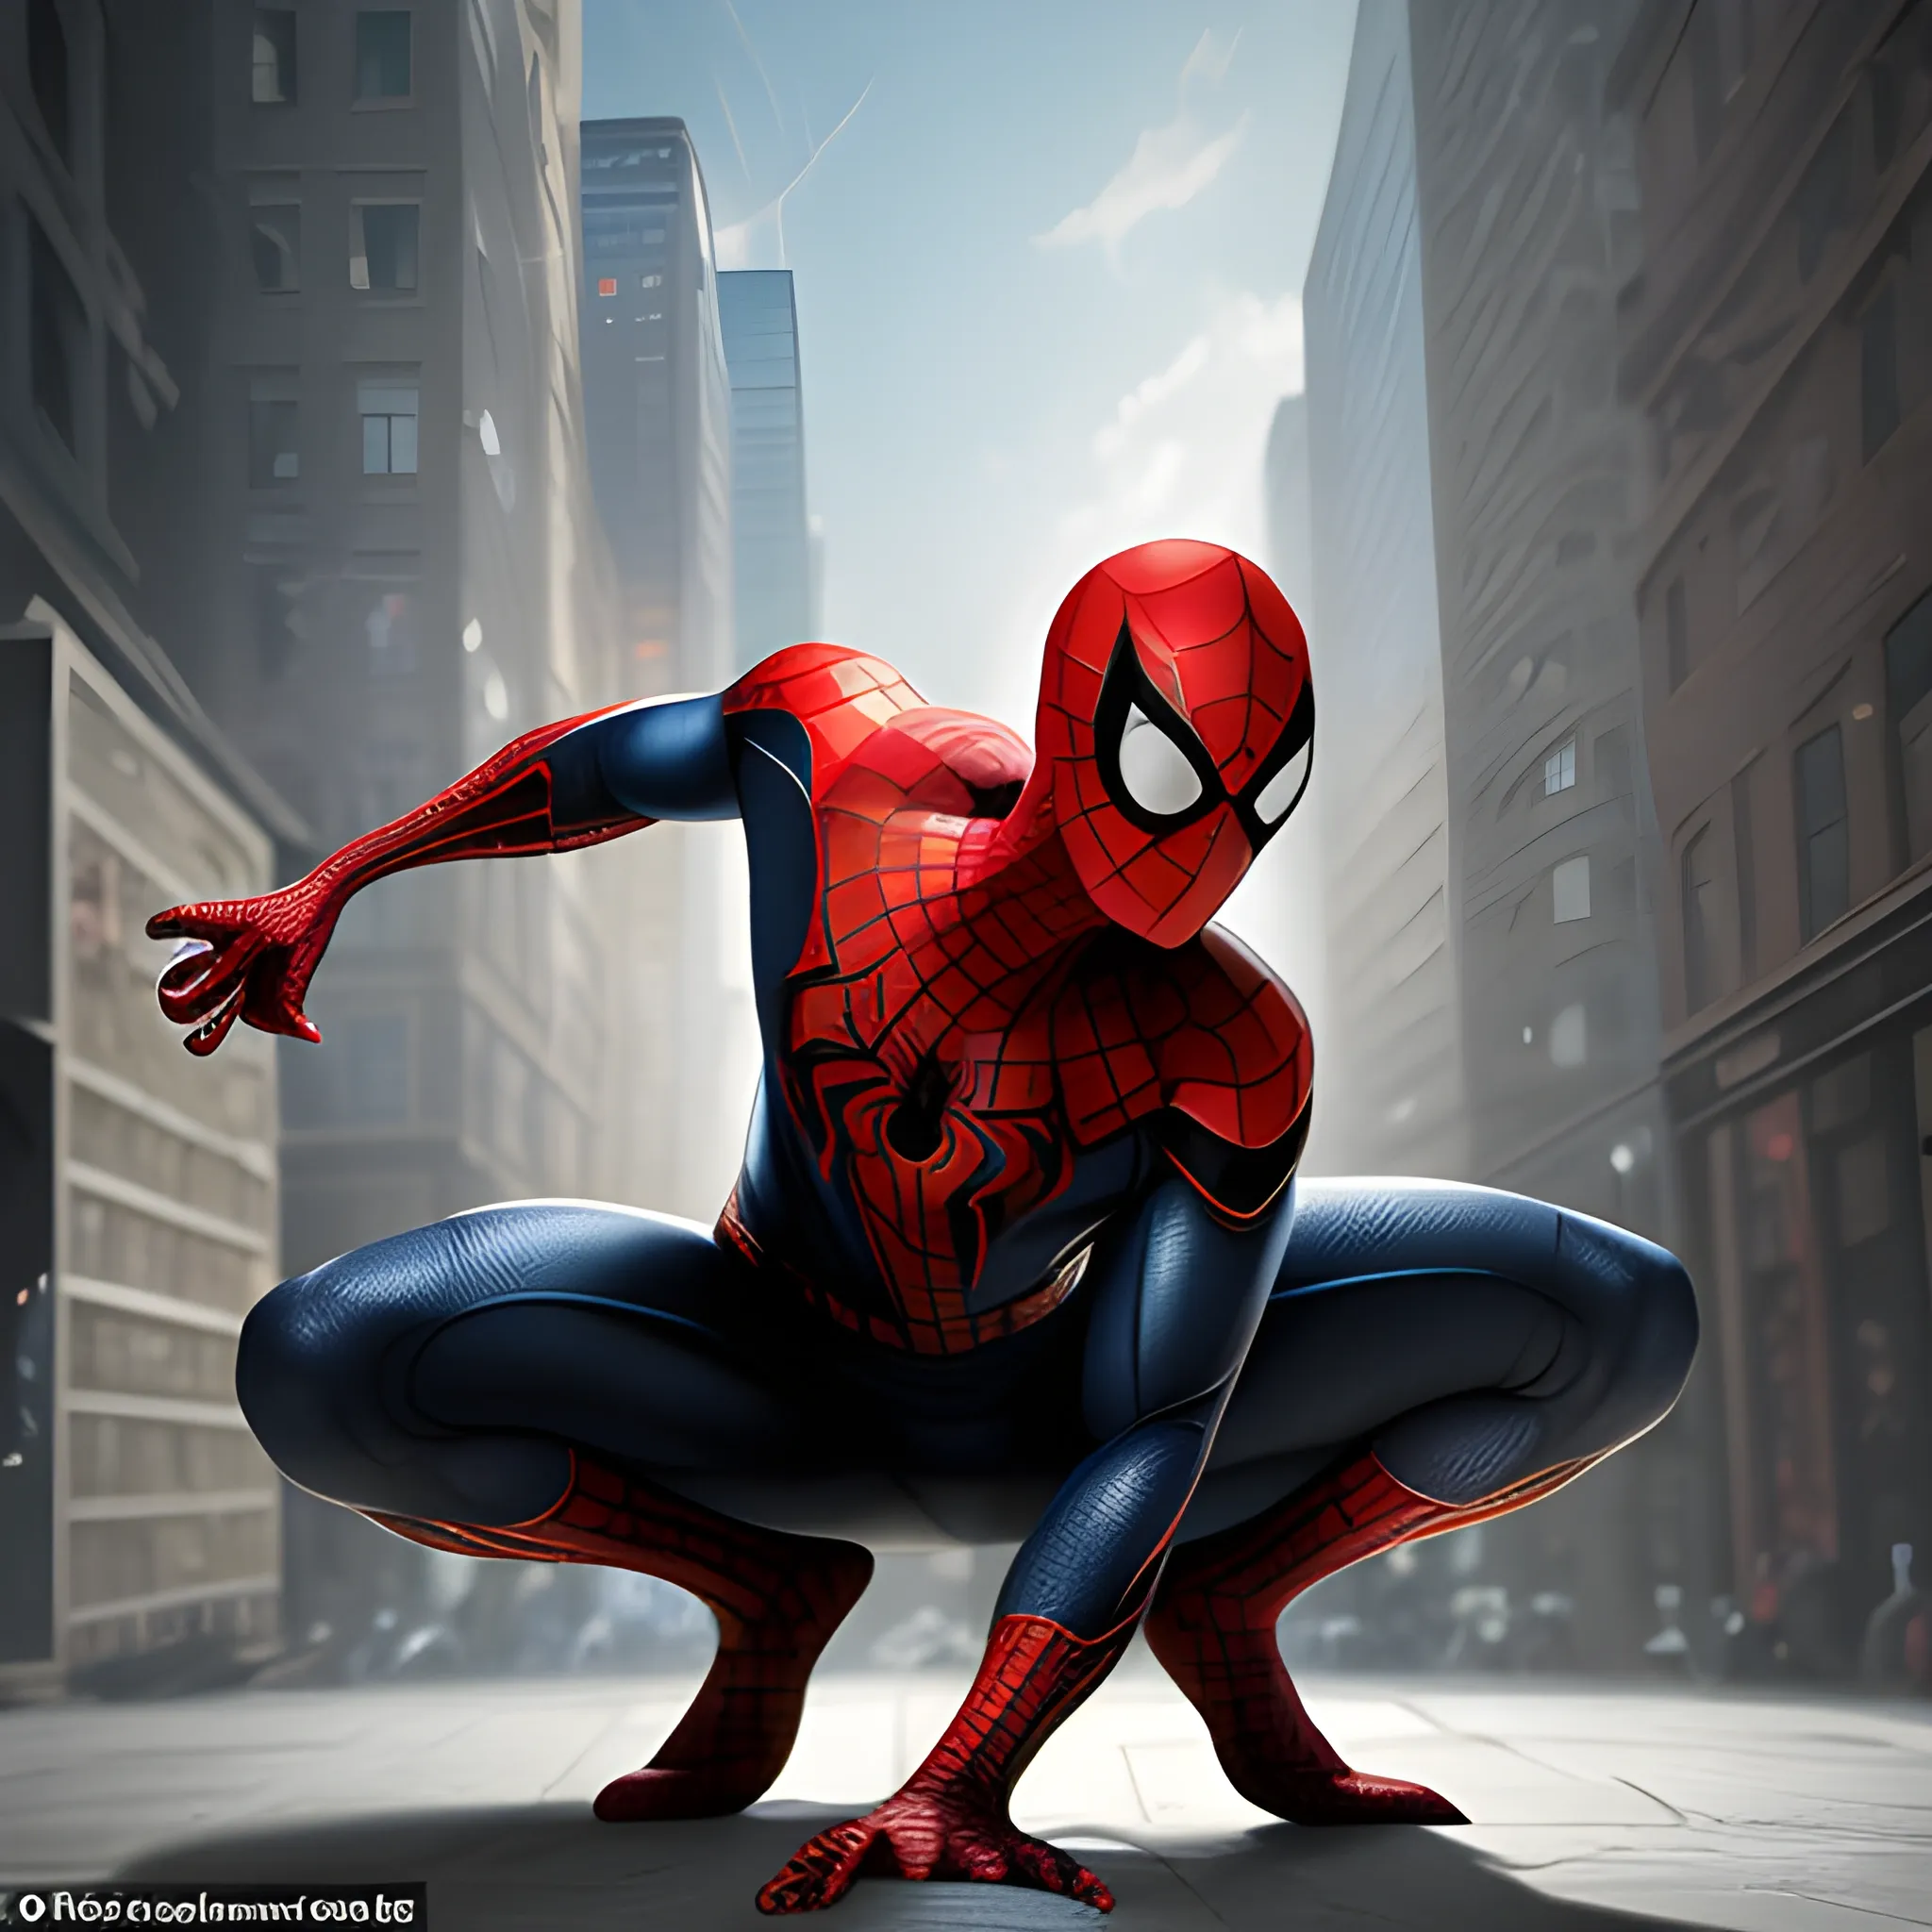 Zastermont Spider-Man dynamic pose elegant highly by X-Cannibal on  DeviantArt